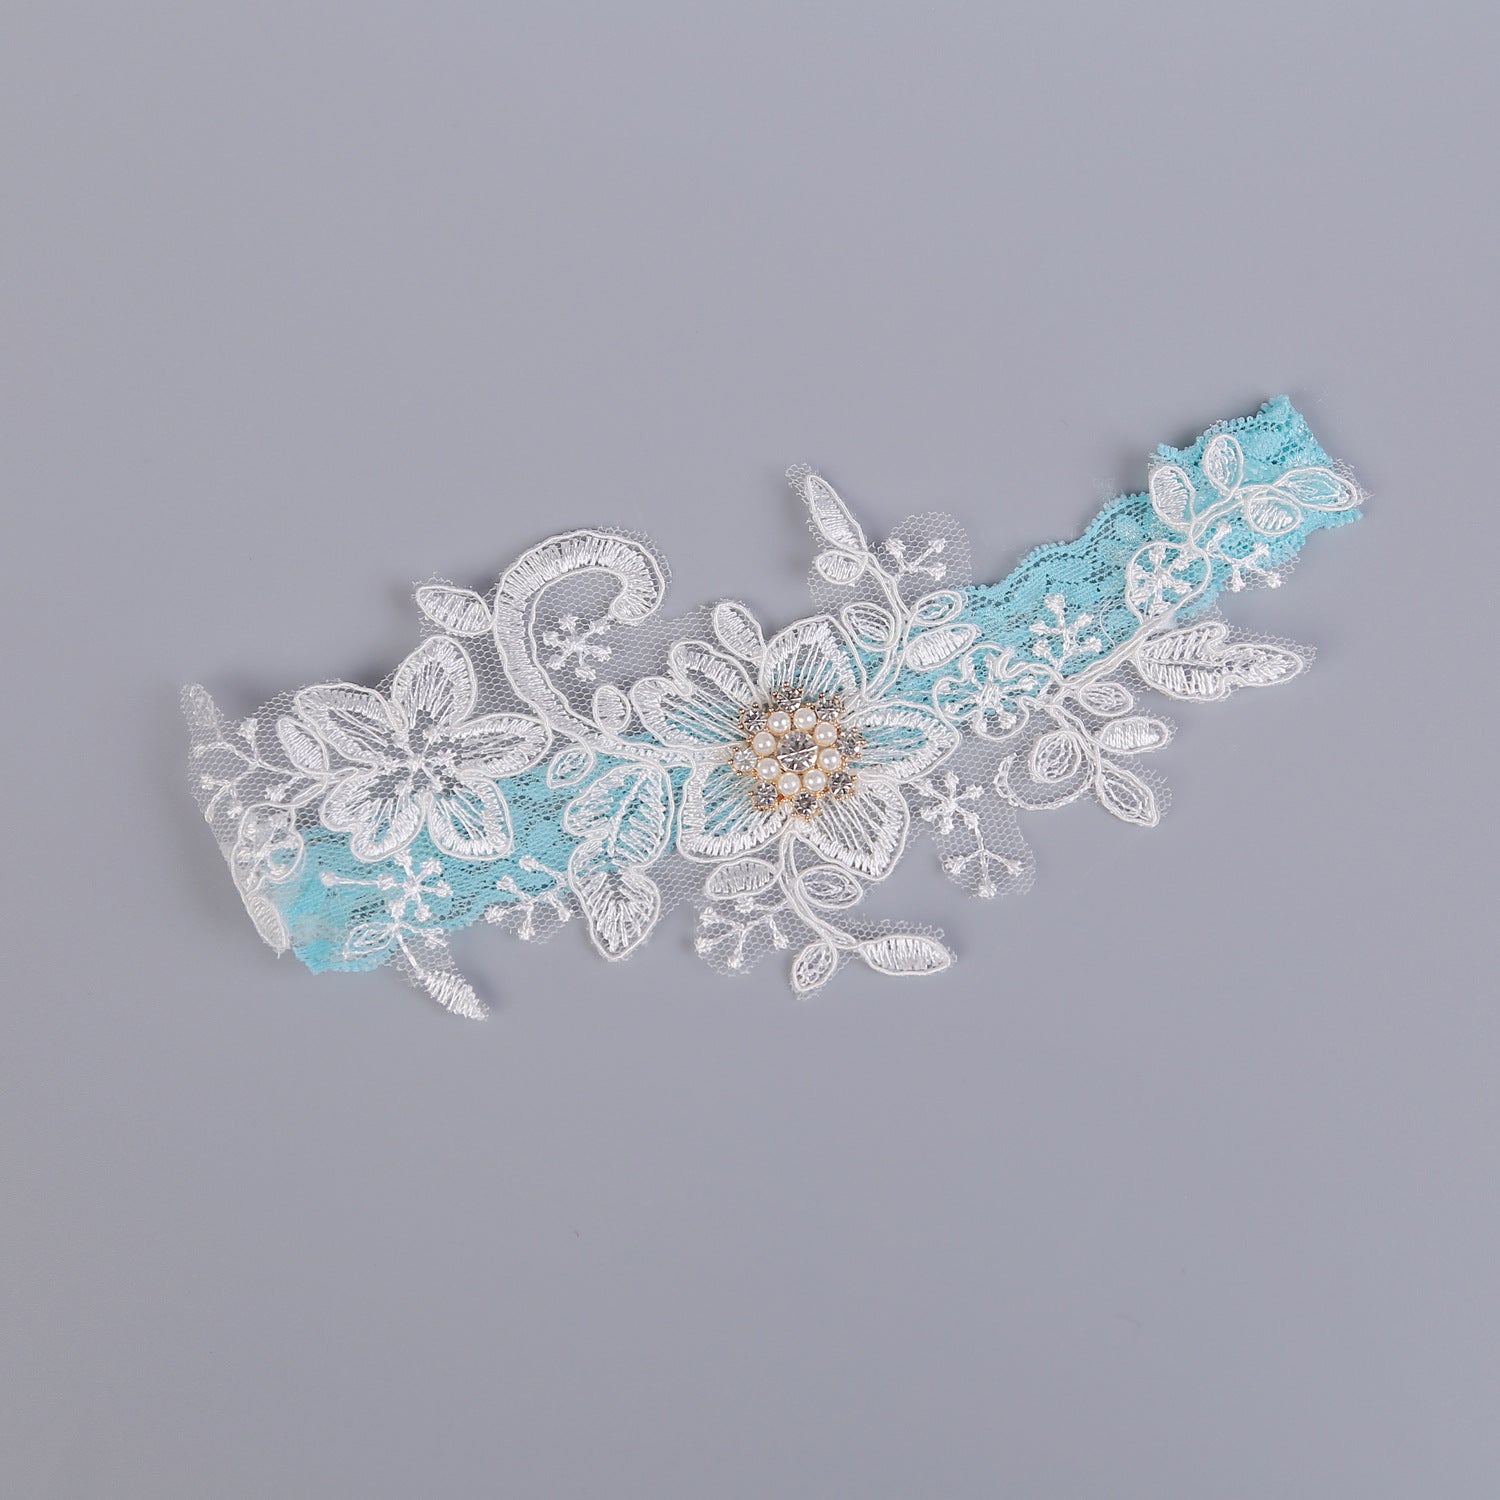 Lace bridal Garter wedding accessories